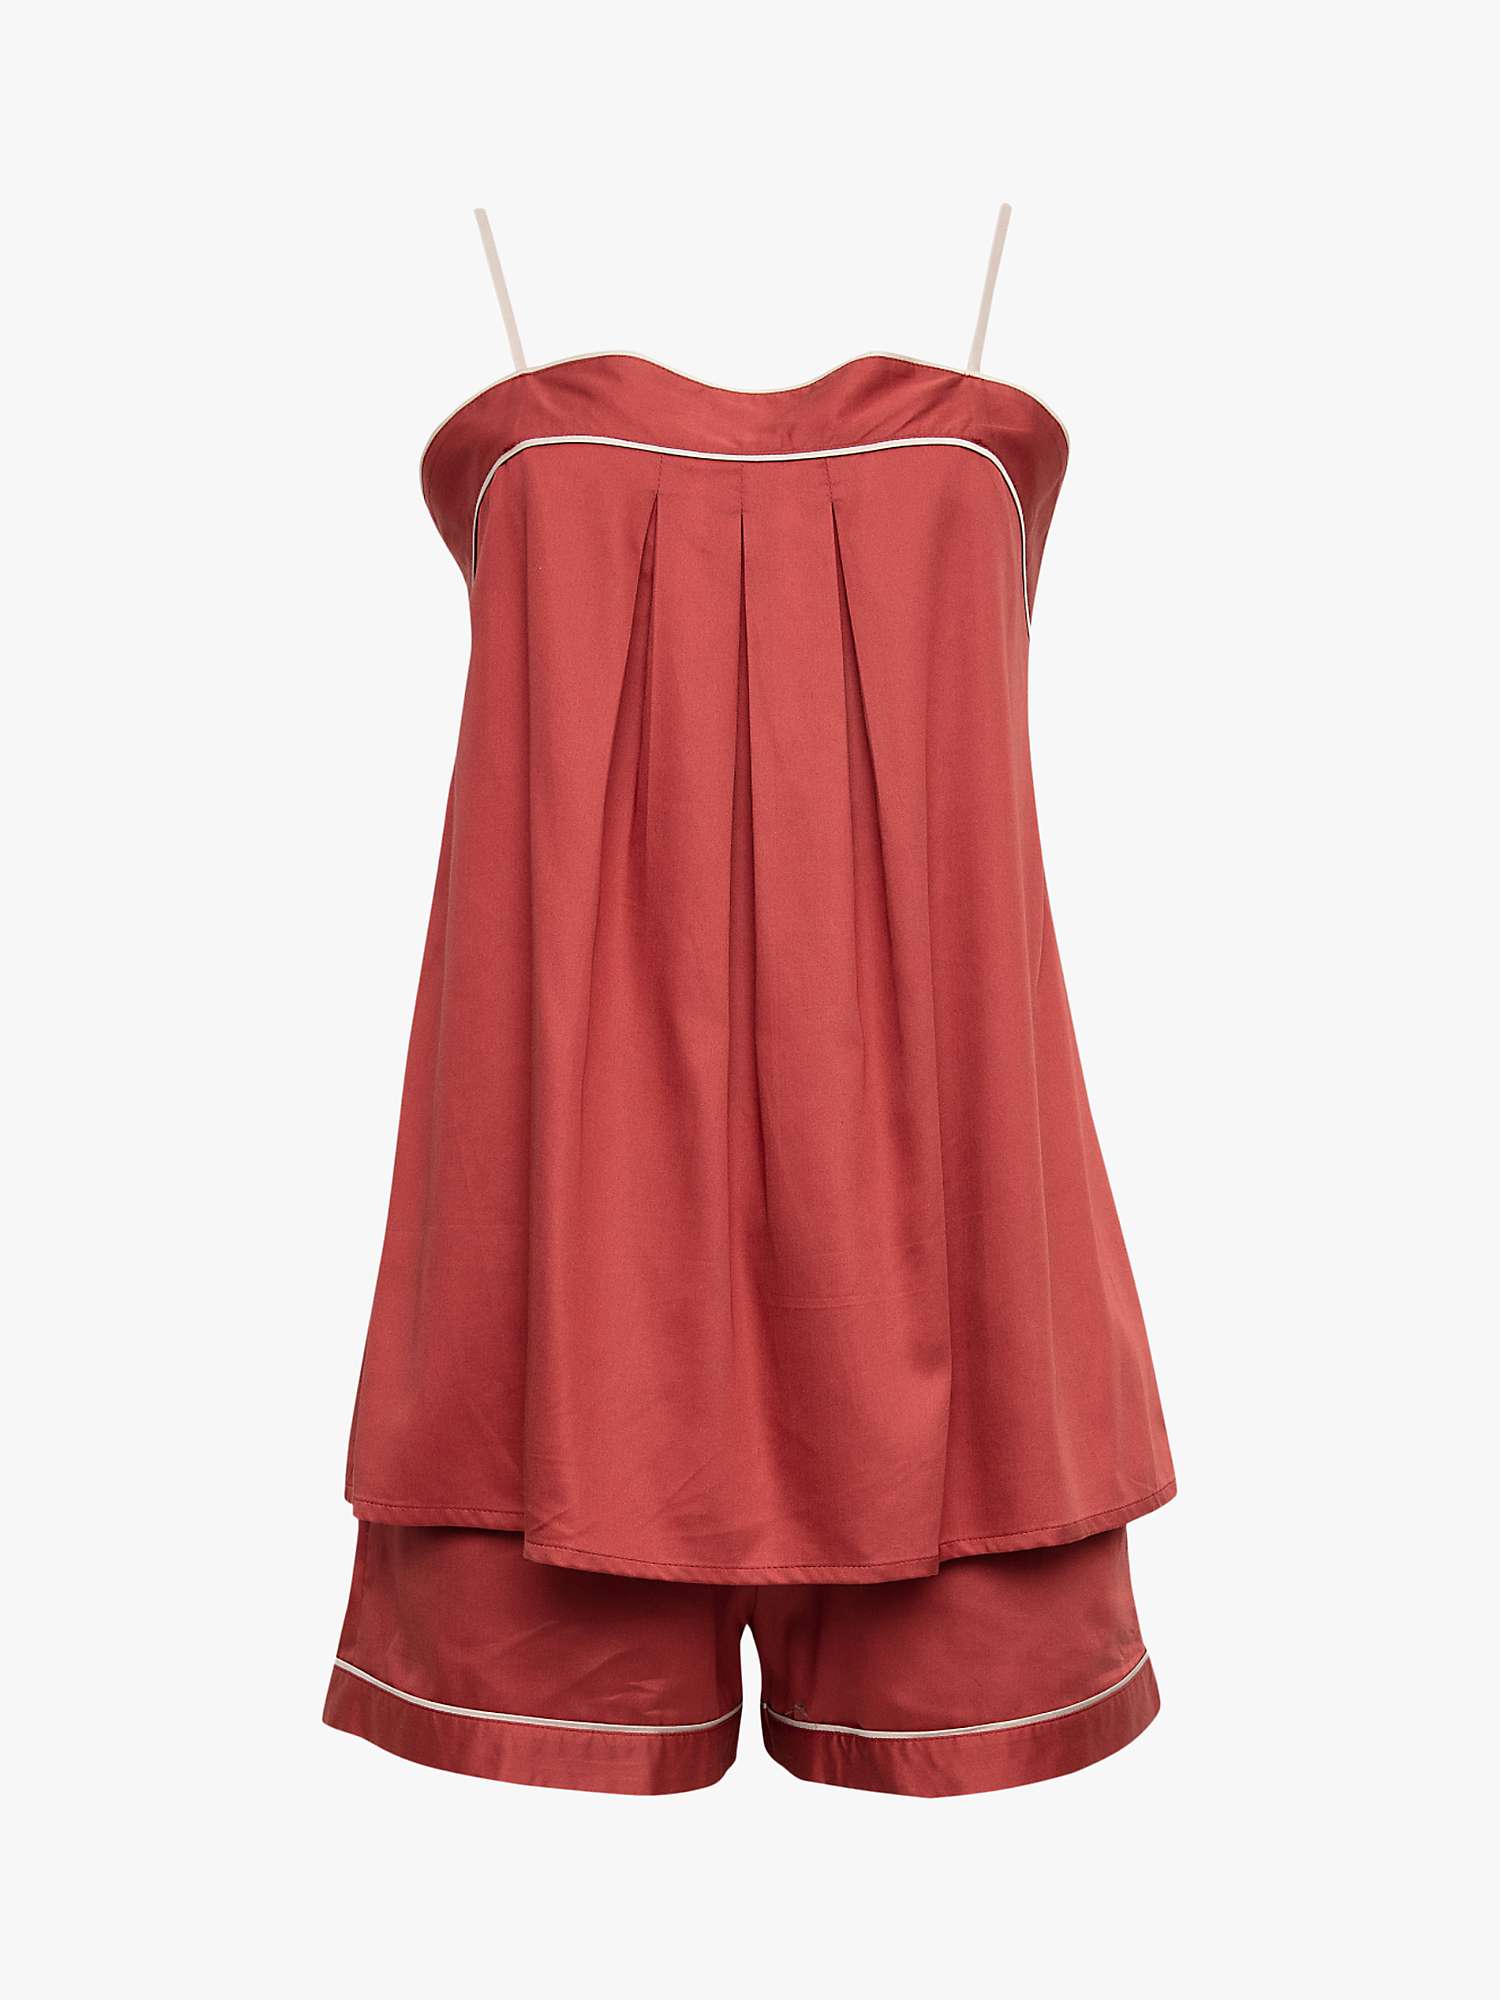 Buy Fable & Eve Islington Strappy Cami Pyjamas, Burnt Orange Online at johnlewis.com